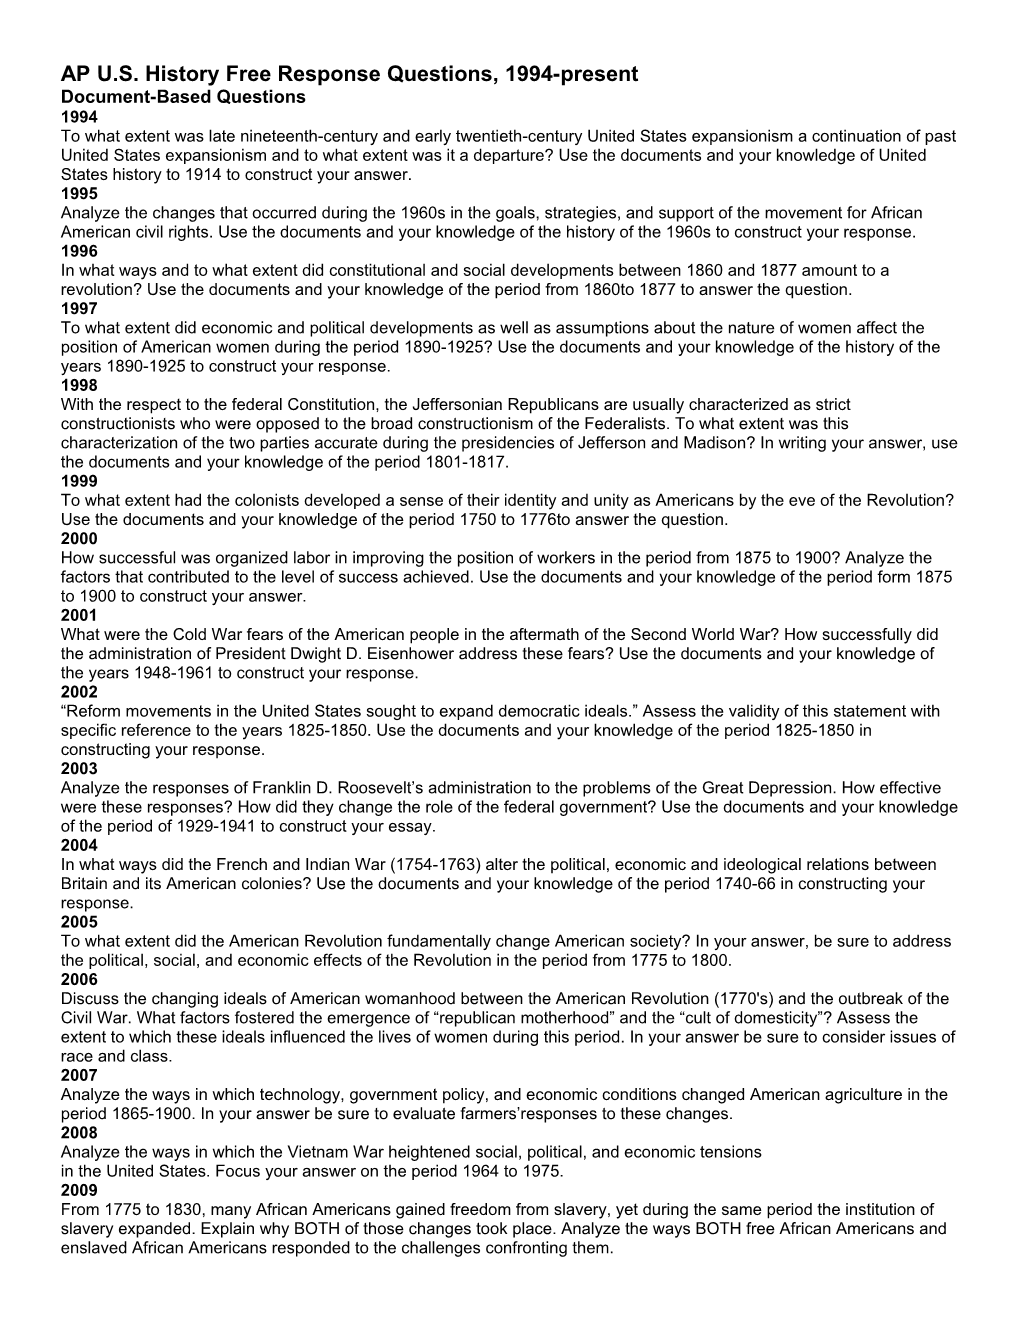 AP U.S. History Free Response Questions, 1994-Present